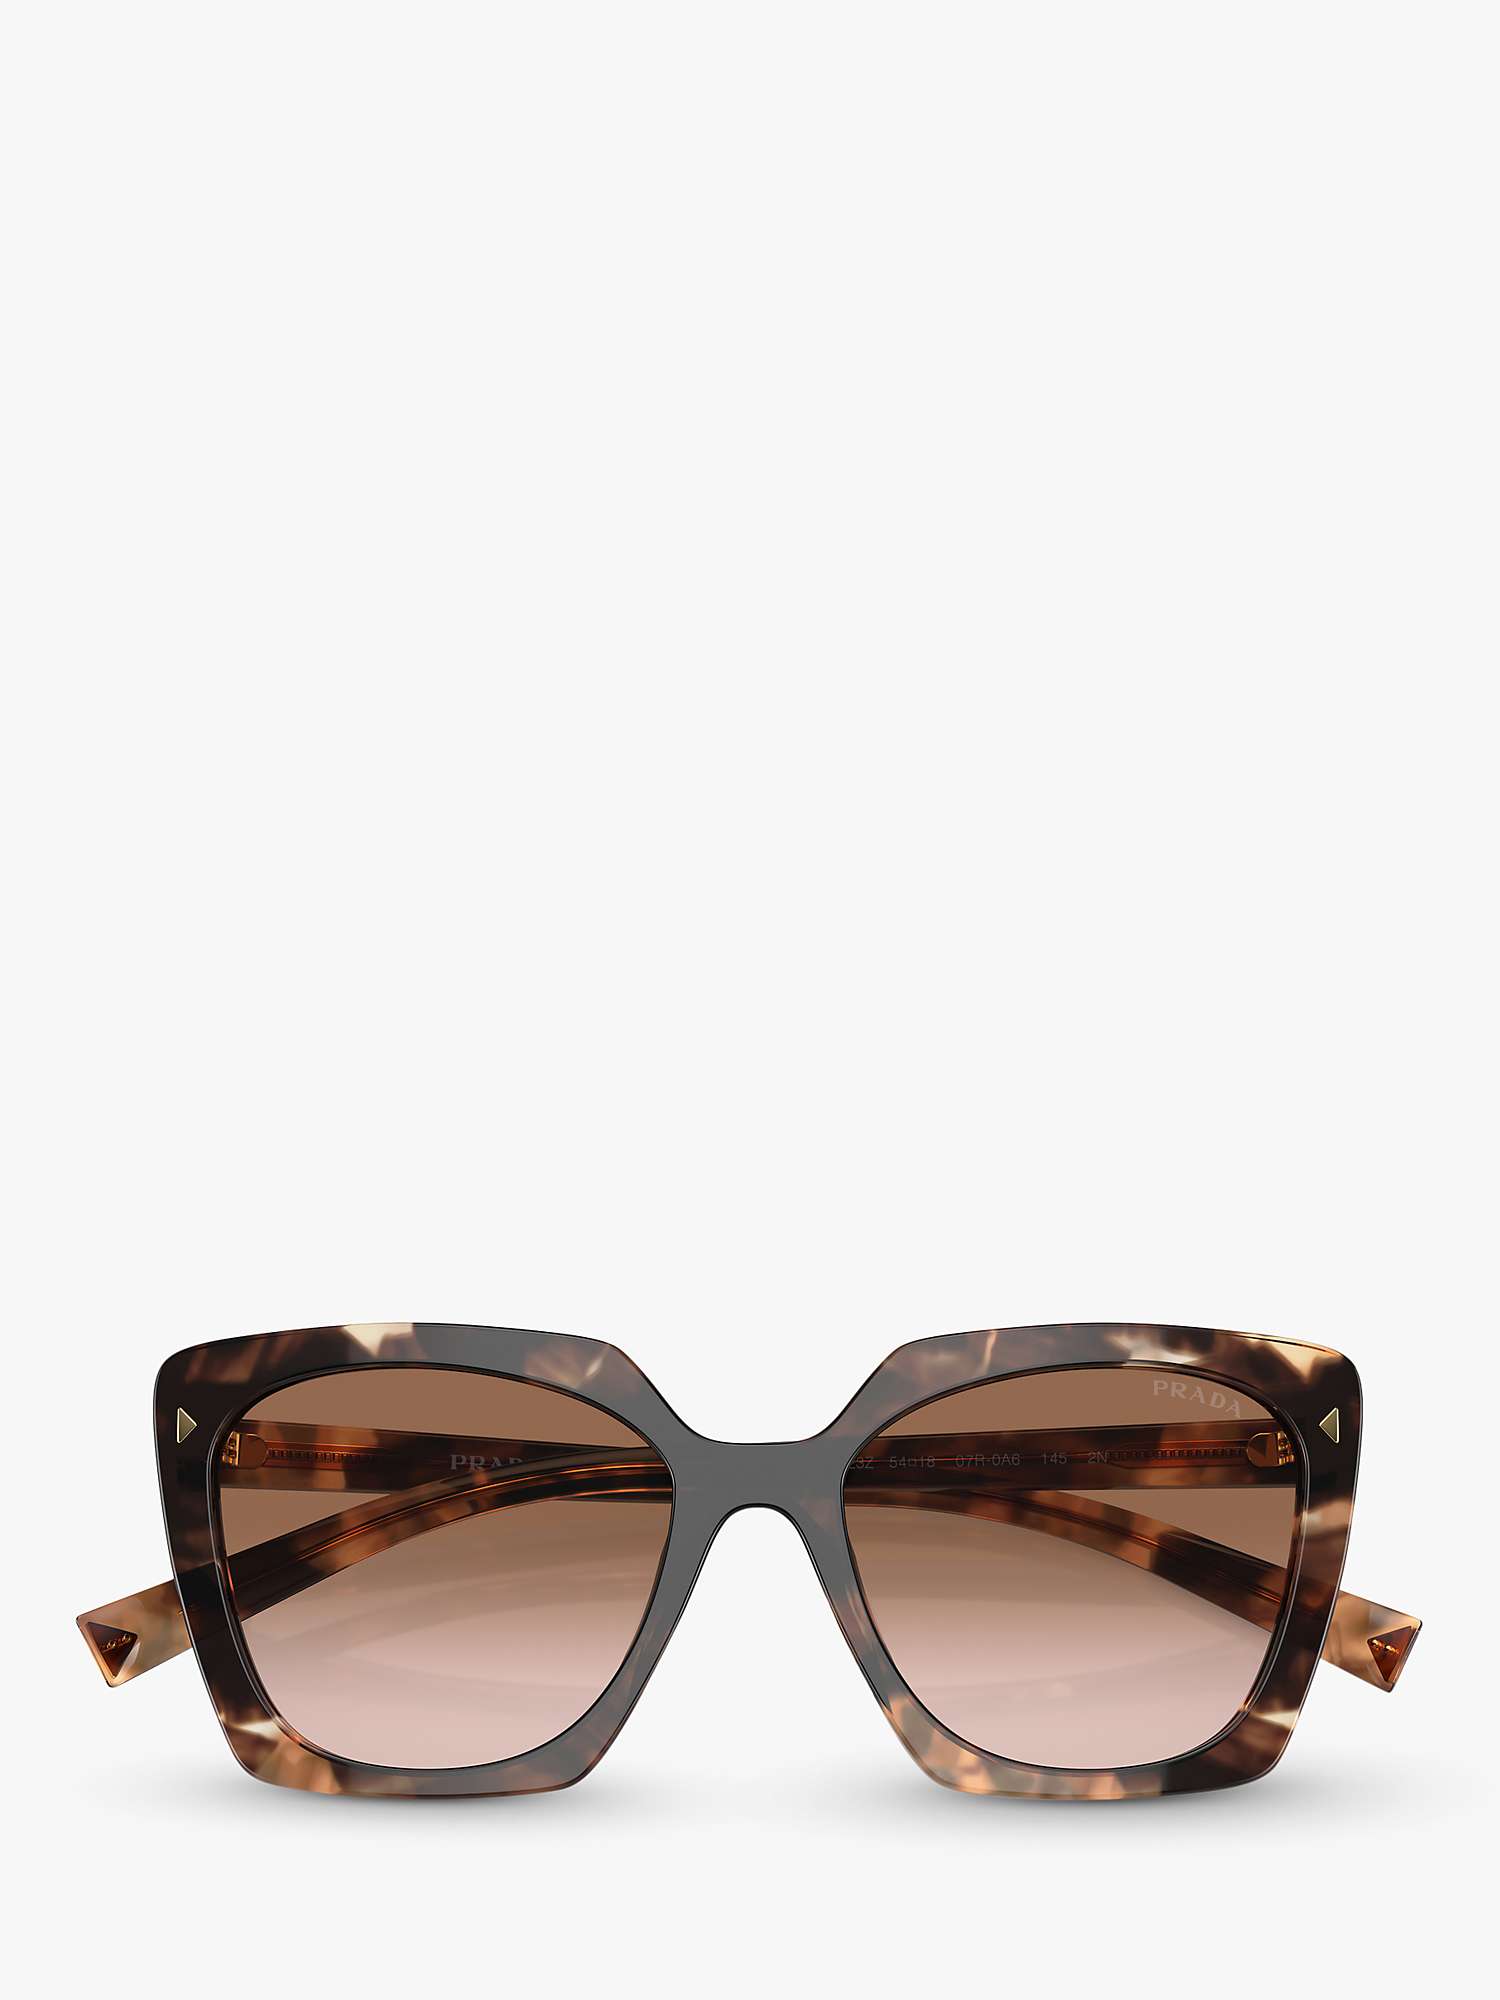 Buy Prada PR 23ZS Women's Square Sunglasses, Caramel Tortoise/Brown Gradient Online at johnlewis.com